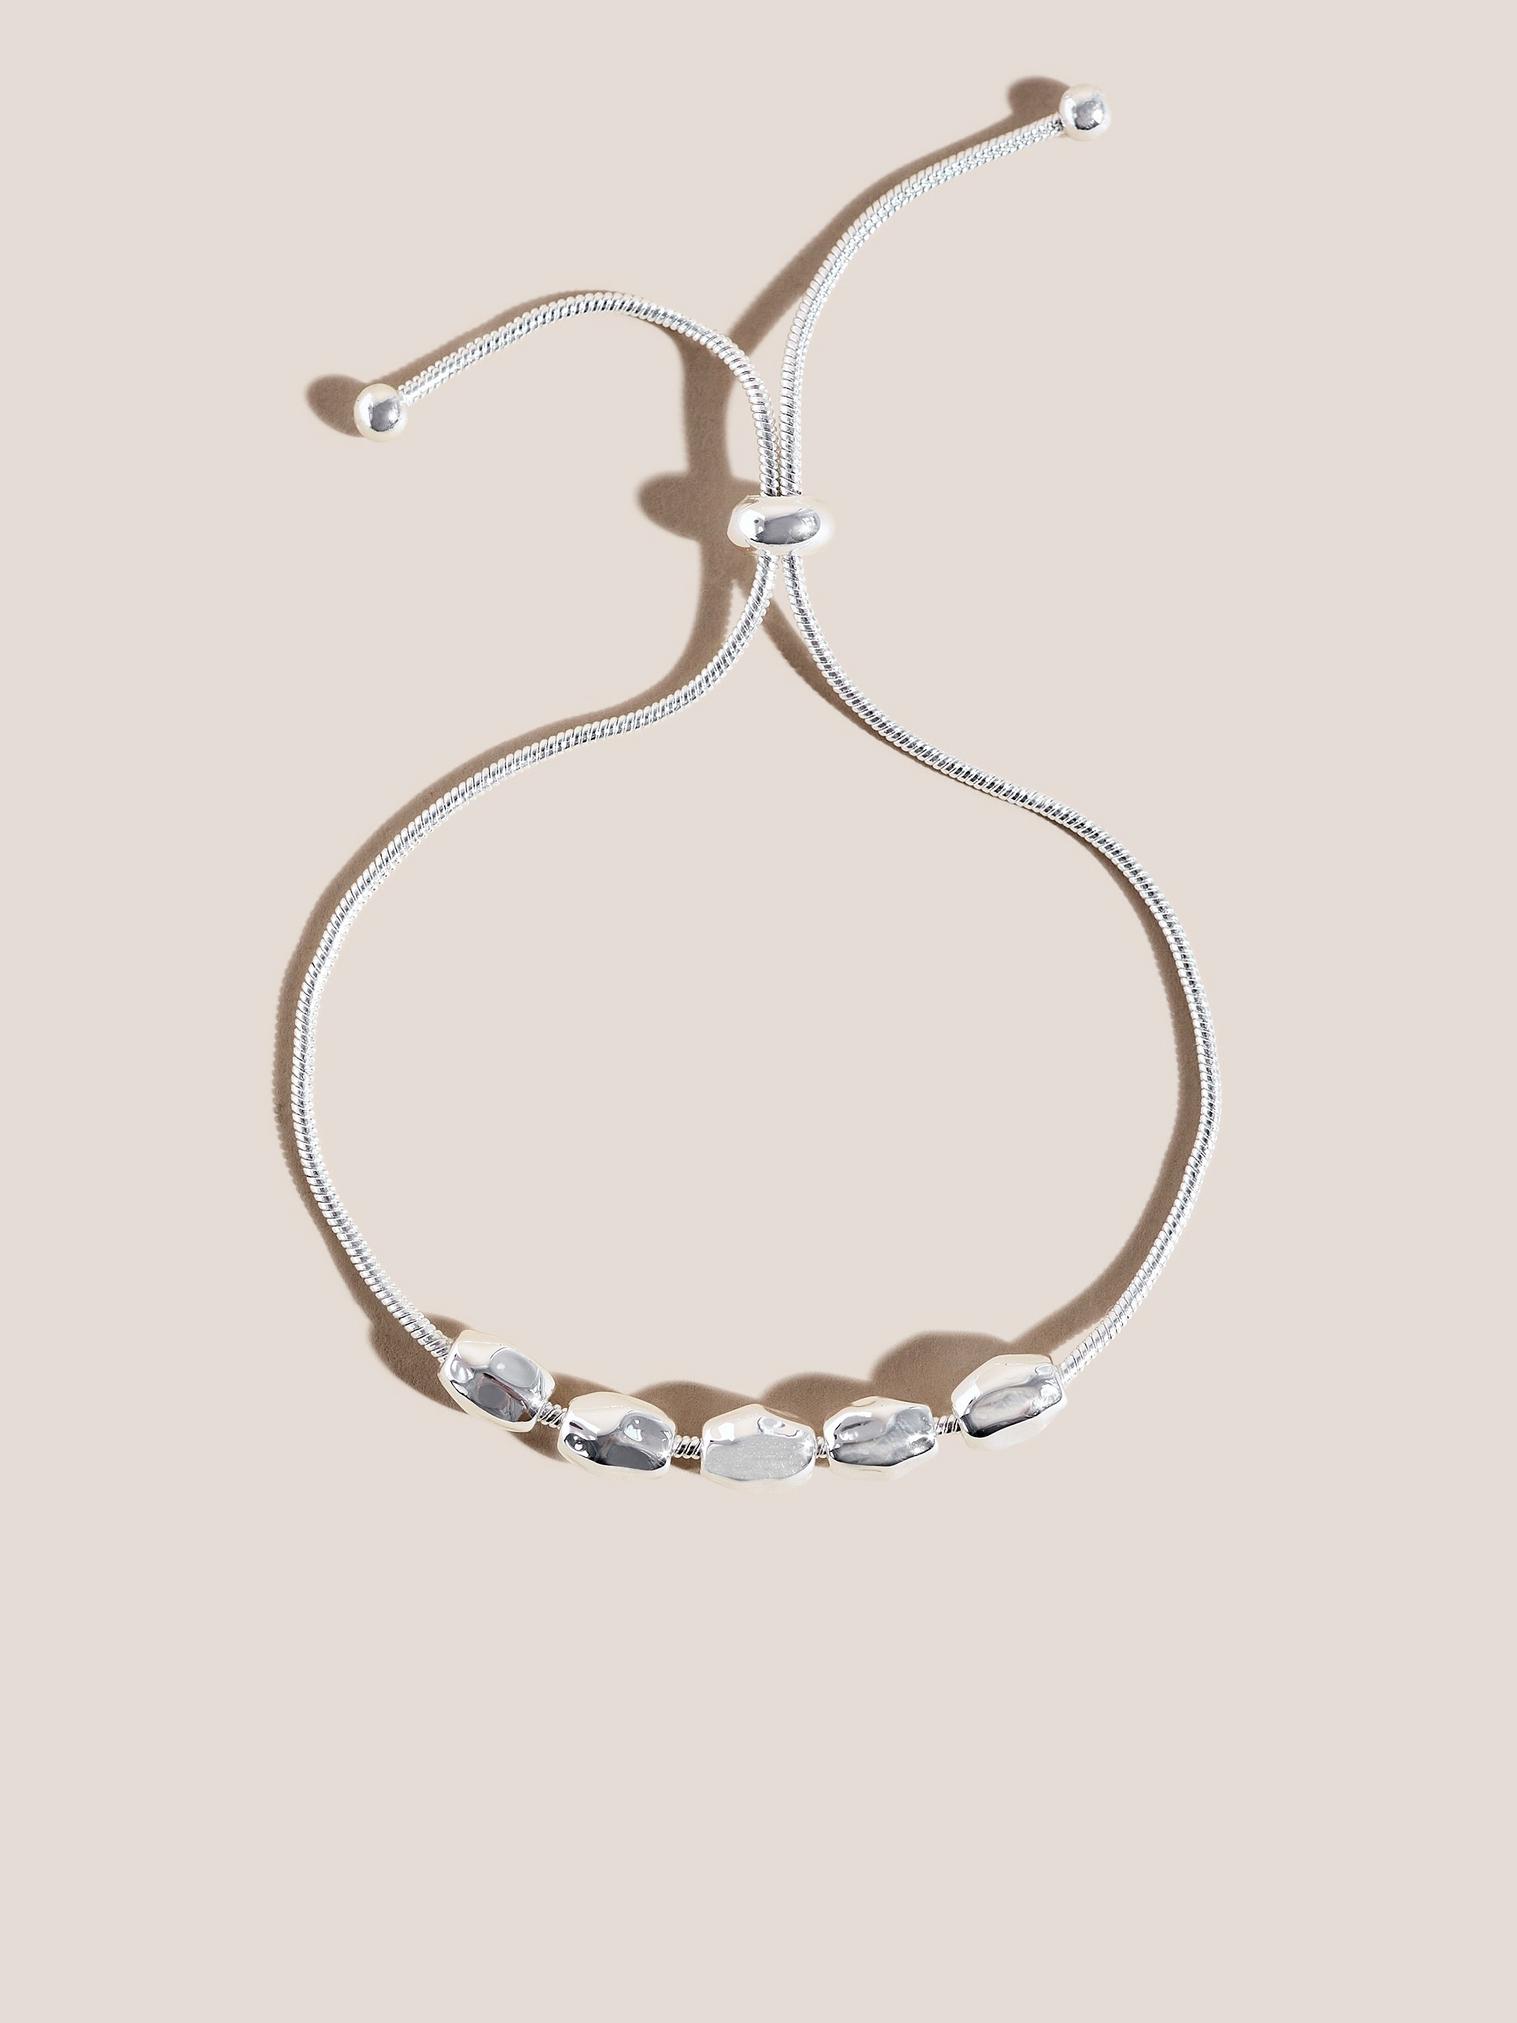 Silver Plated Bead Bracelet in SLV TN MET - FLAT FRONT